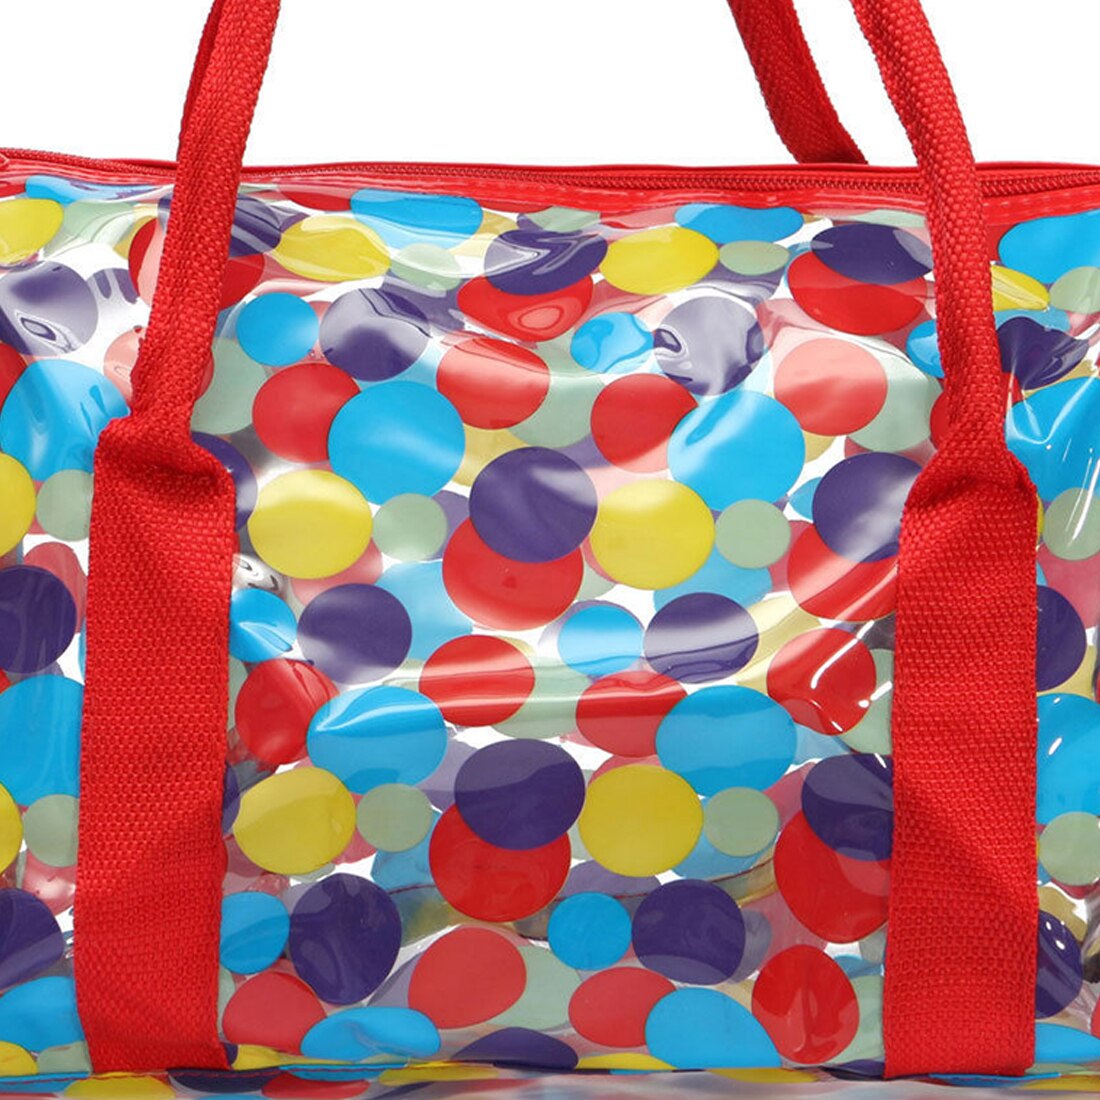 New Transparent Handbag Clear Waterproof Jelly Tote Travel Makeup Wash Beach Bag - ebowsos